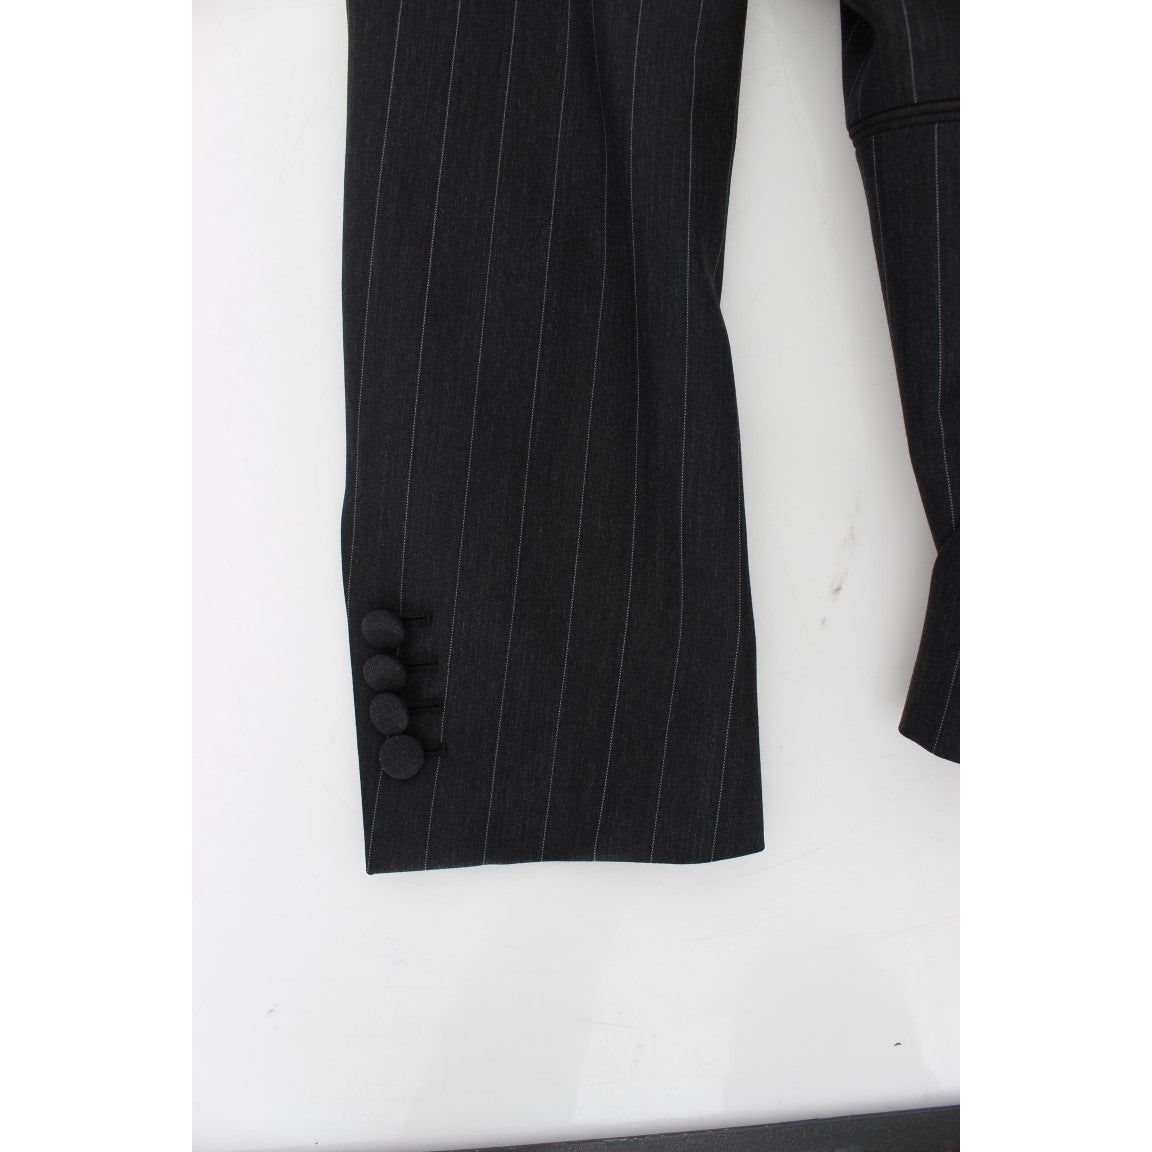 Dolce & Gabbana Chic Gray Striped Wool Blazer Jacket gray-striped-slim-fit-wool-blazer